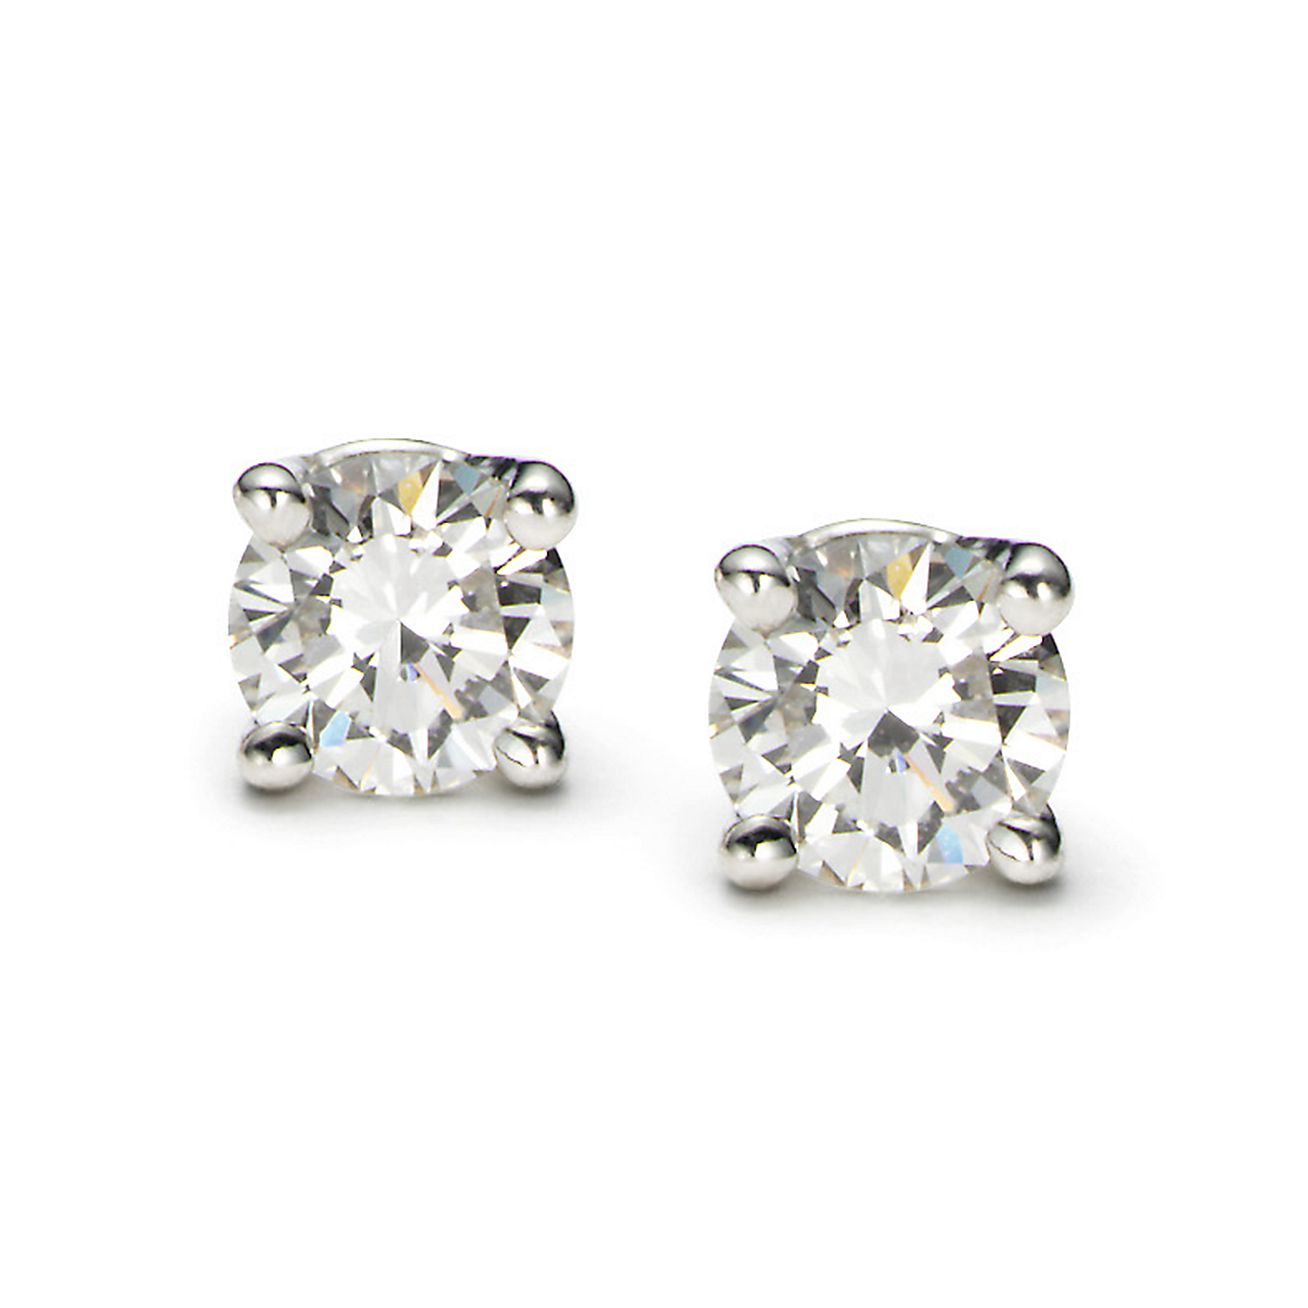 Tiffany diamond studs. Diamonds, platinum. | Tiffany & Co.